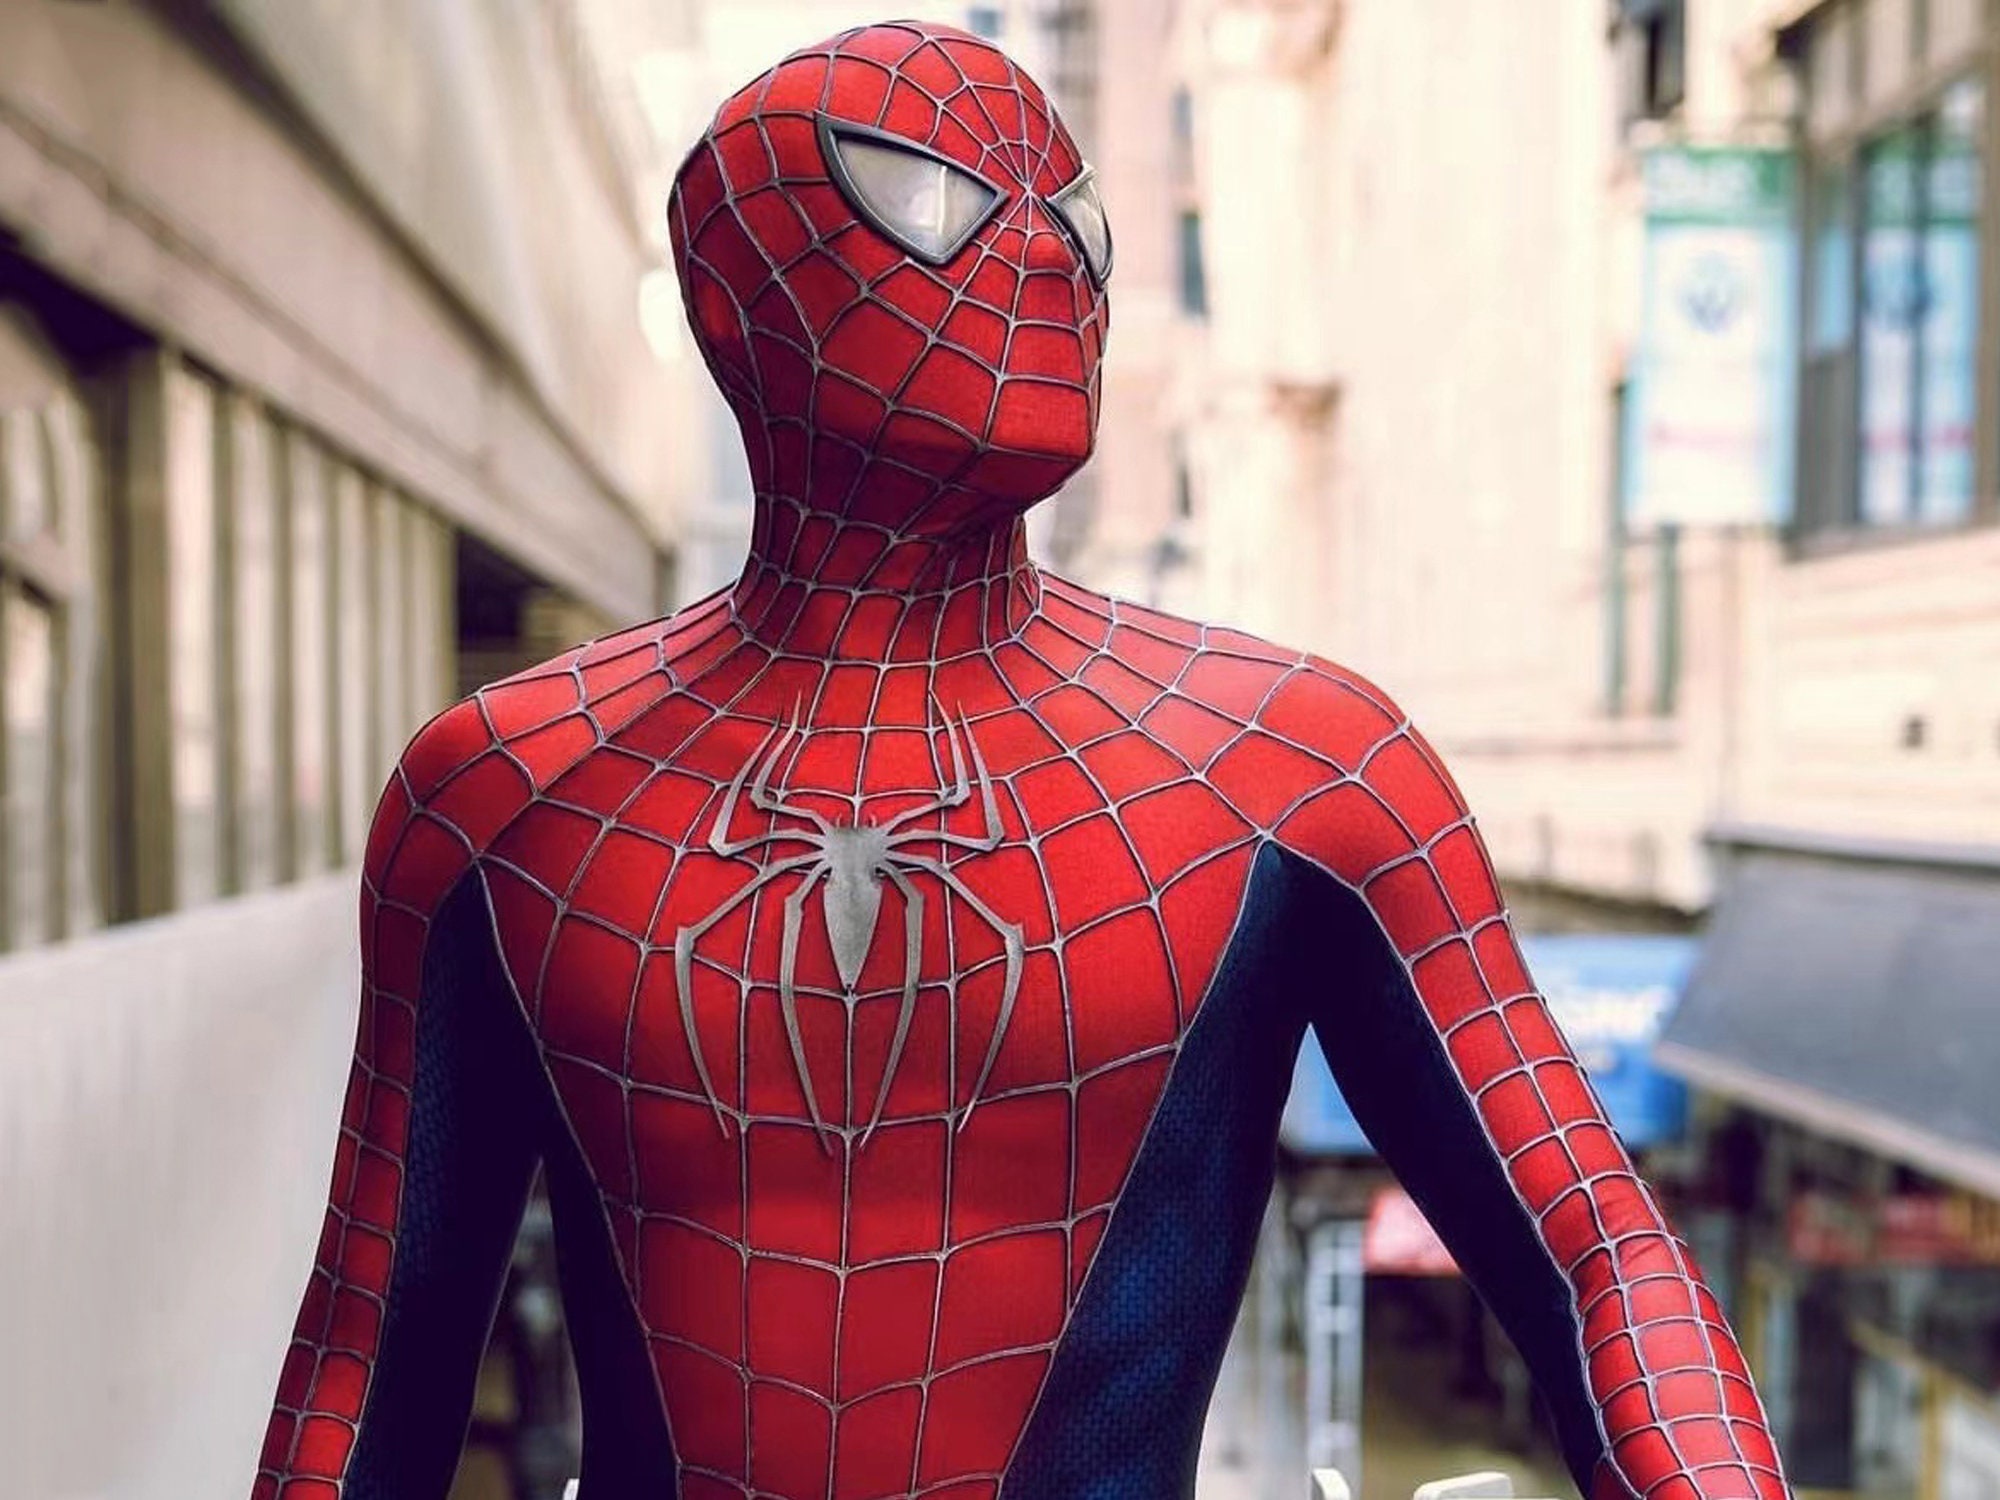 Spiderman costume replica - Etsy España